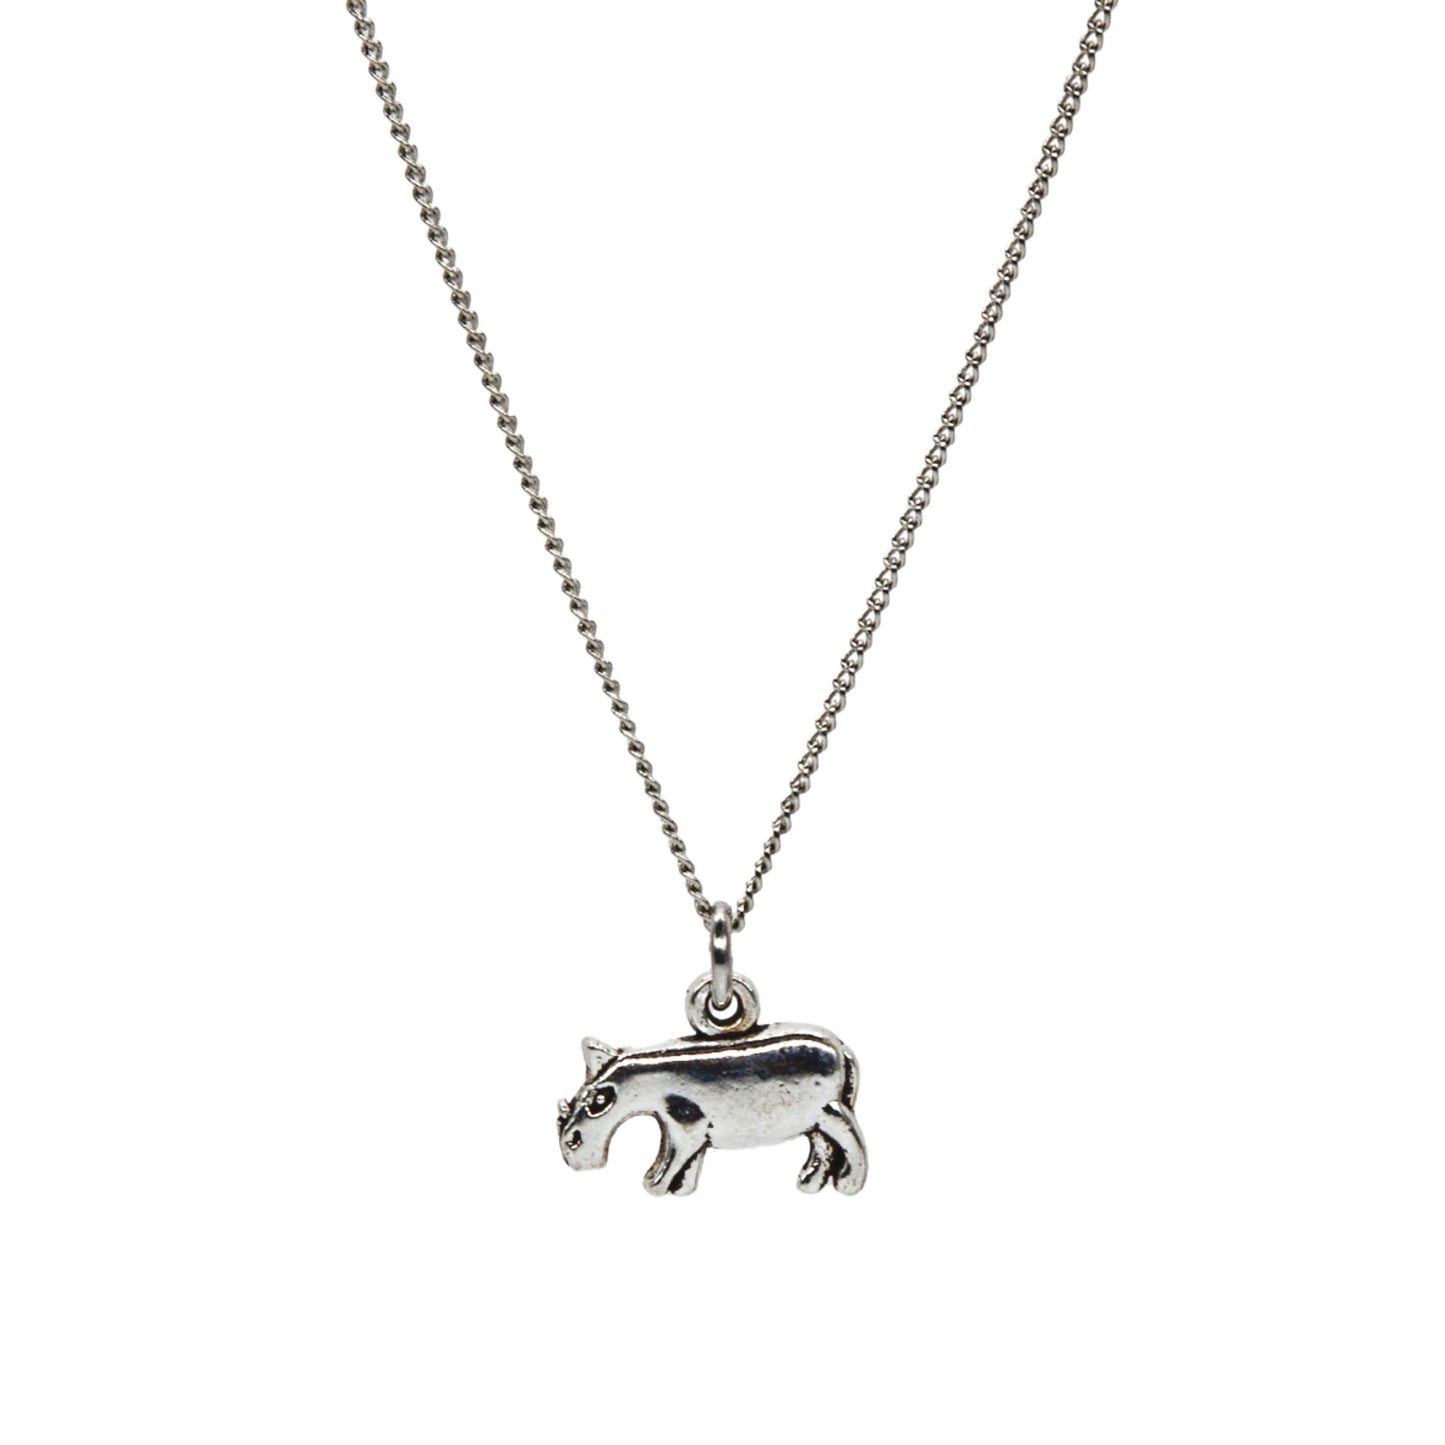 Silver Rhino Necklace - Adjustable Length